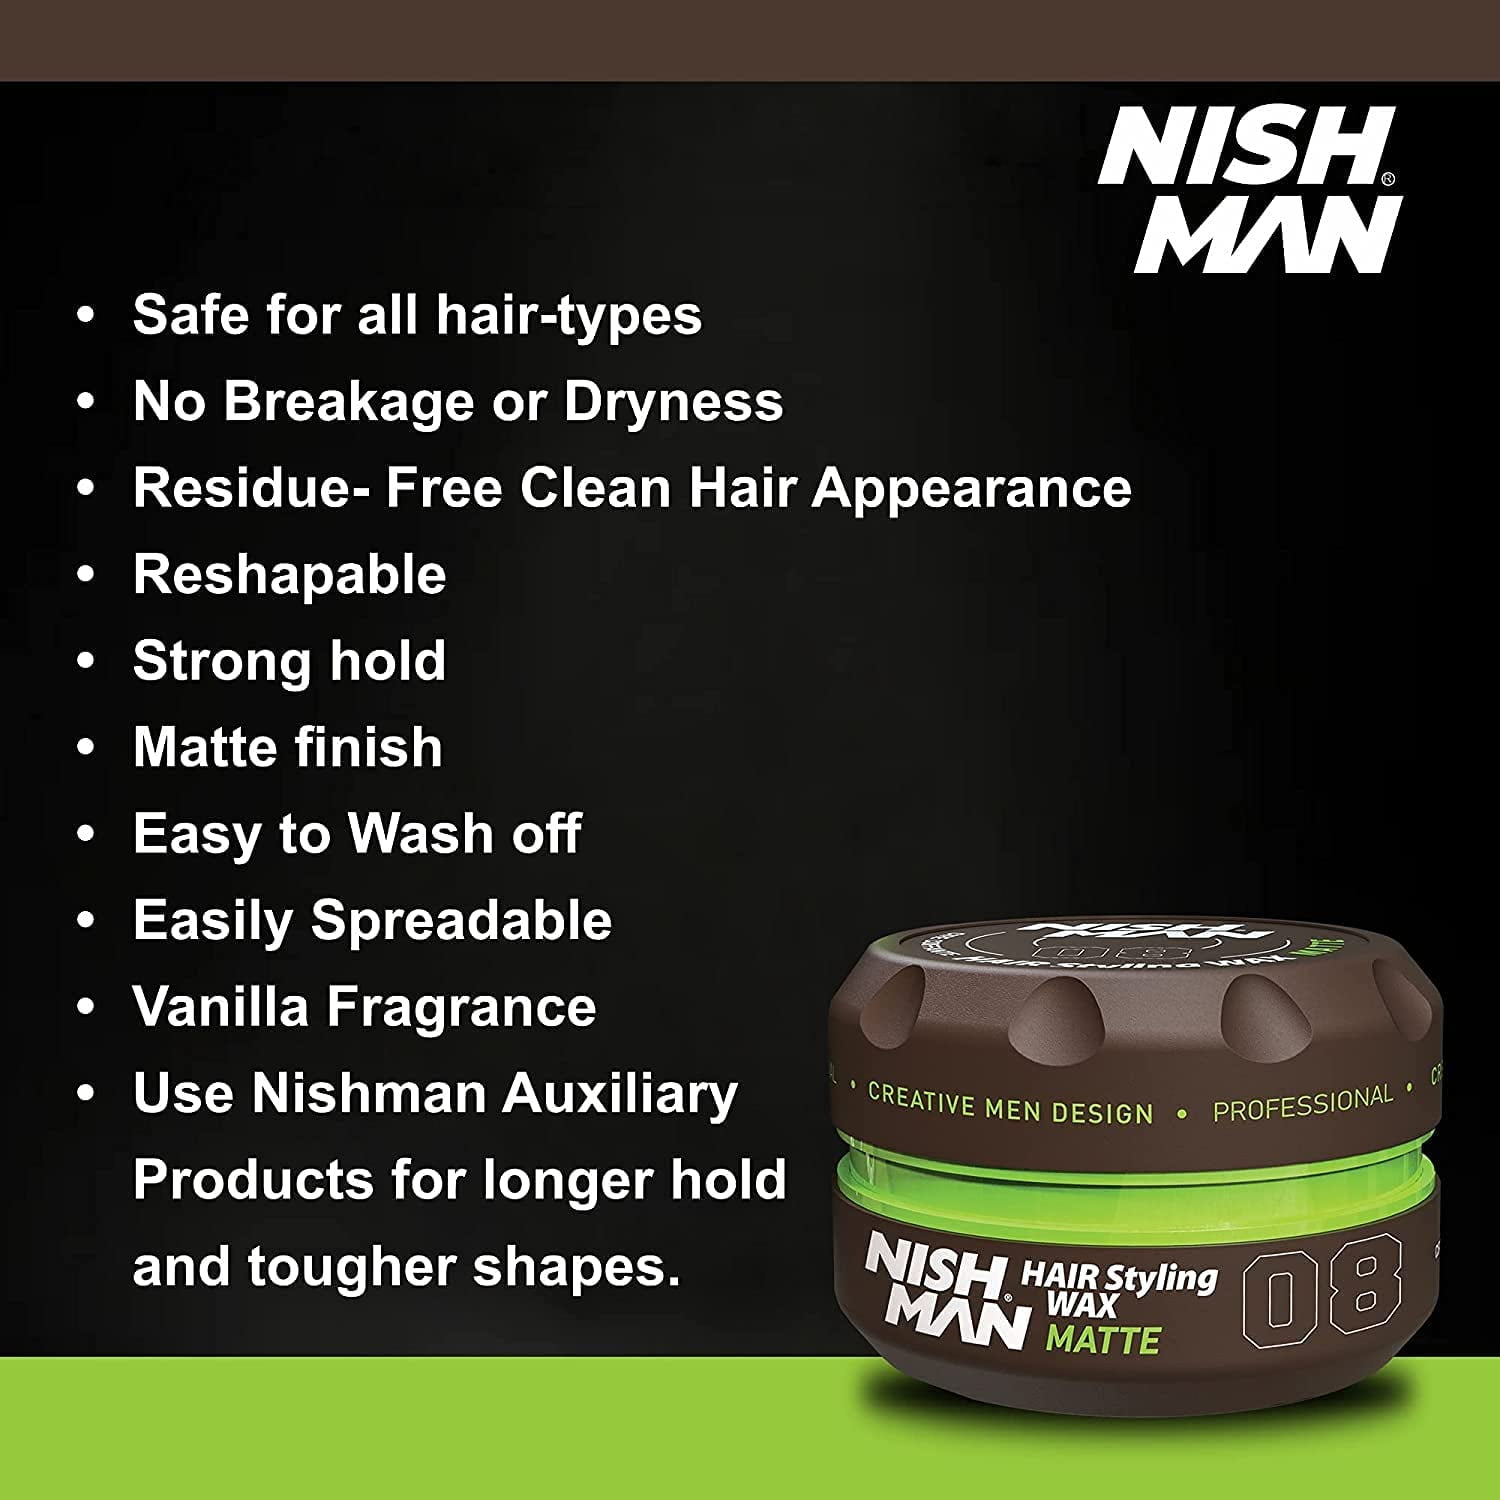 nishman Hair Styling Series (S2 Tarantula Spider Wax, 150ml)